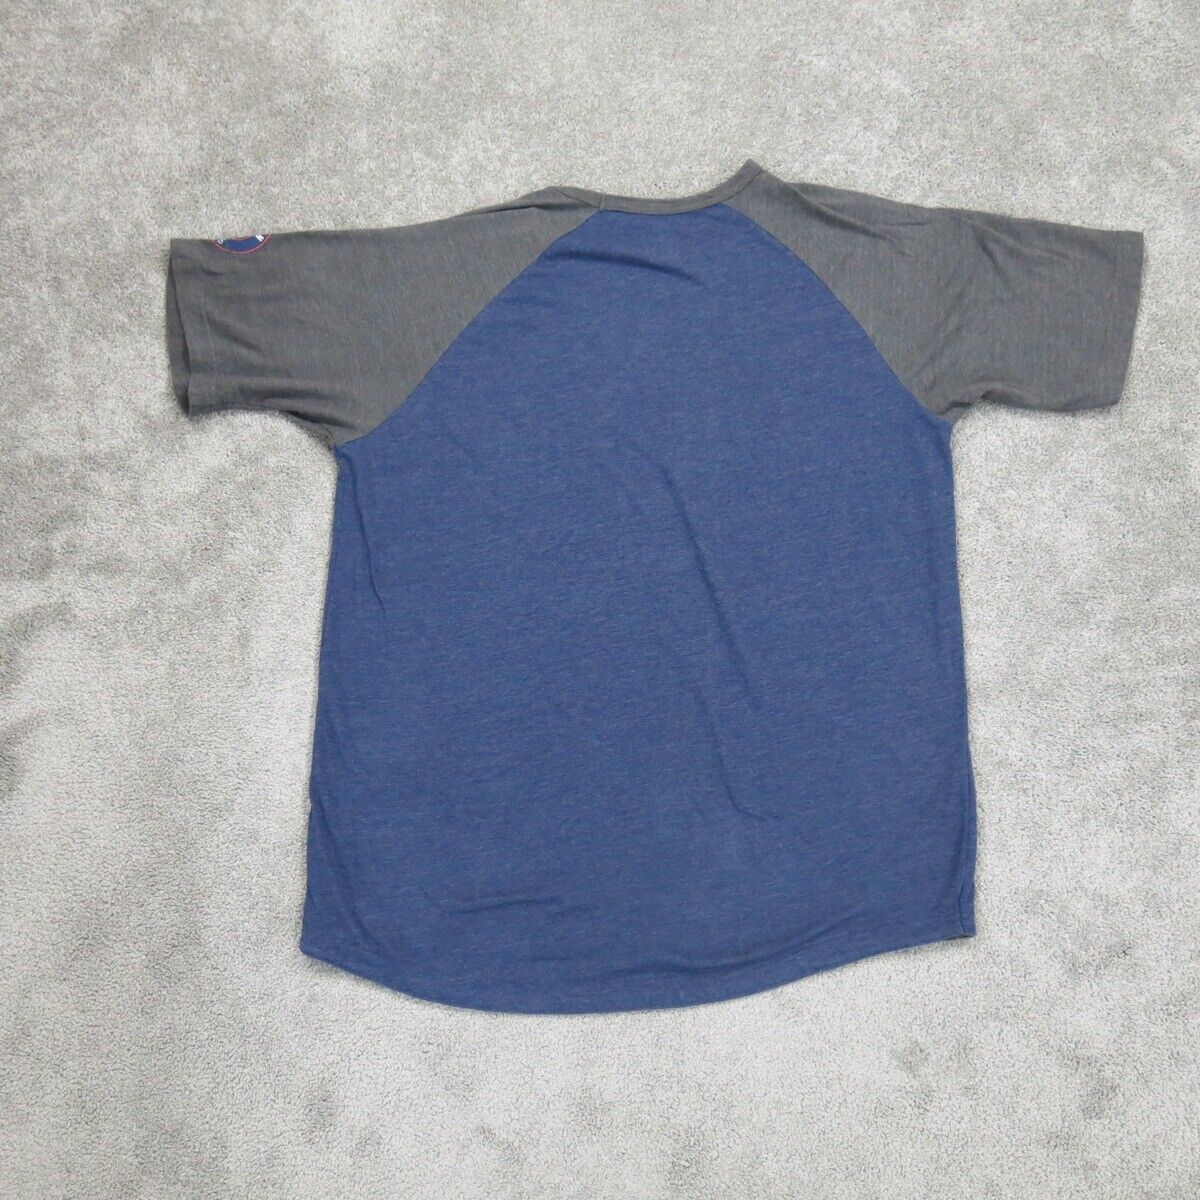 Majestic Bangor Pennsylvania Mens T Shirt Short Sleeves Astros Logo Blue Size XL